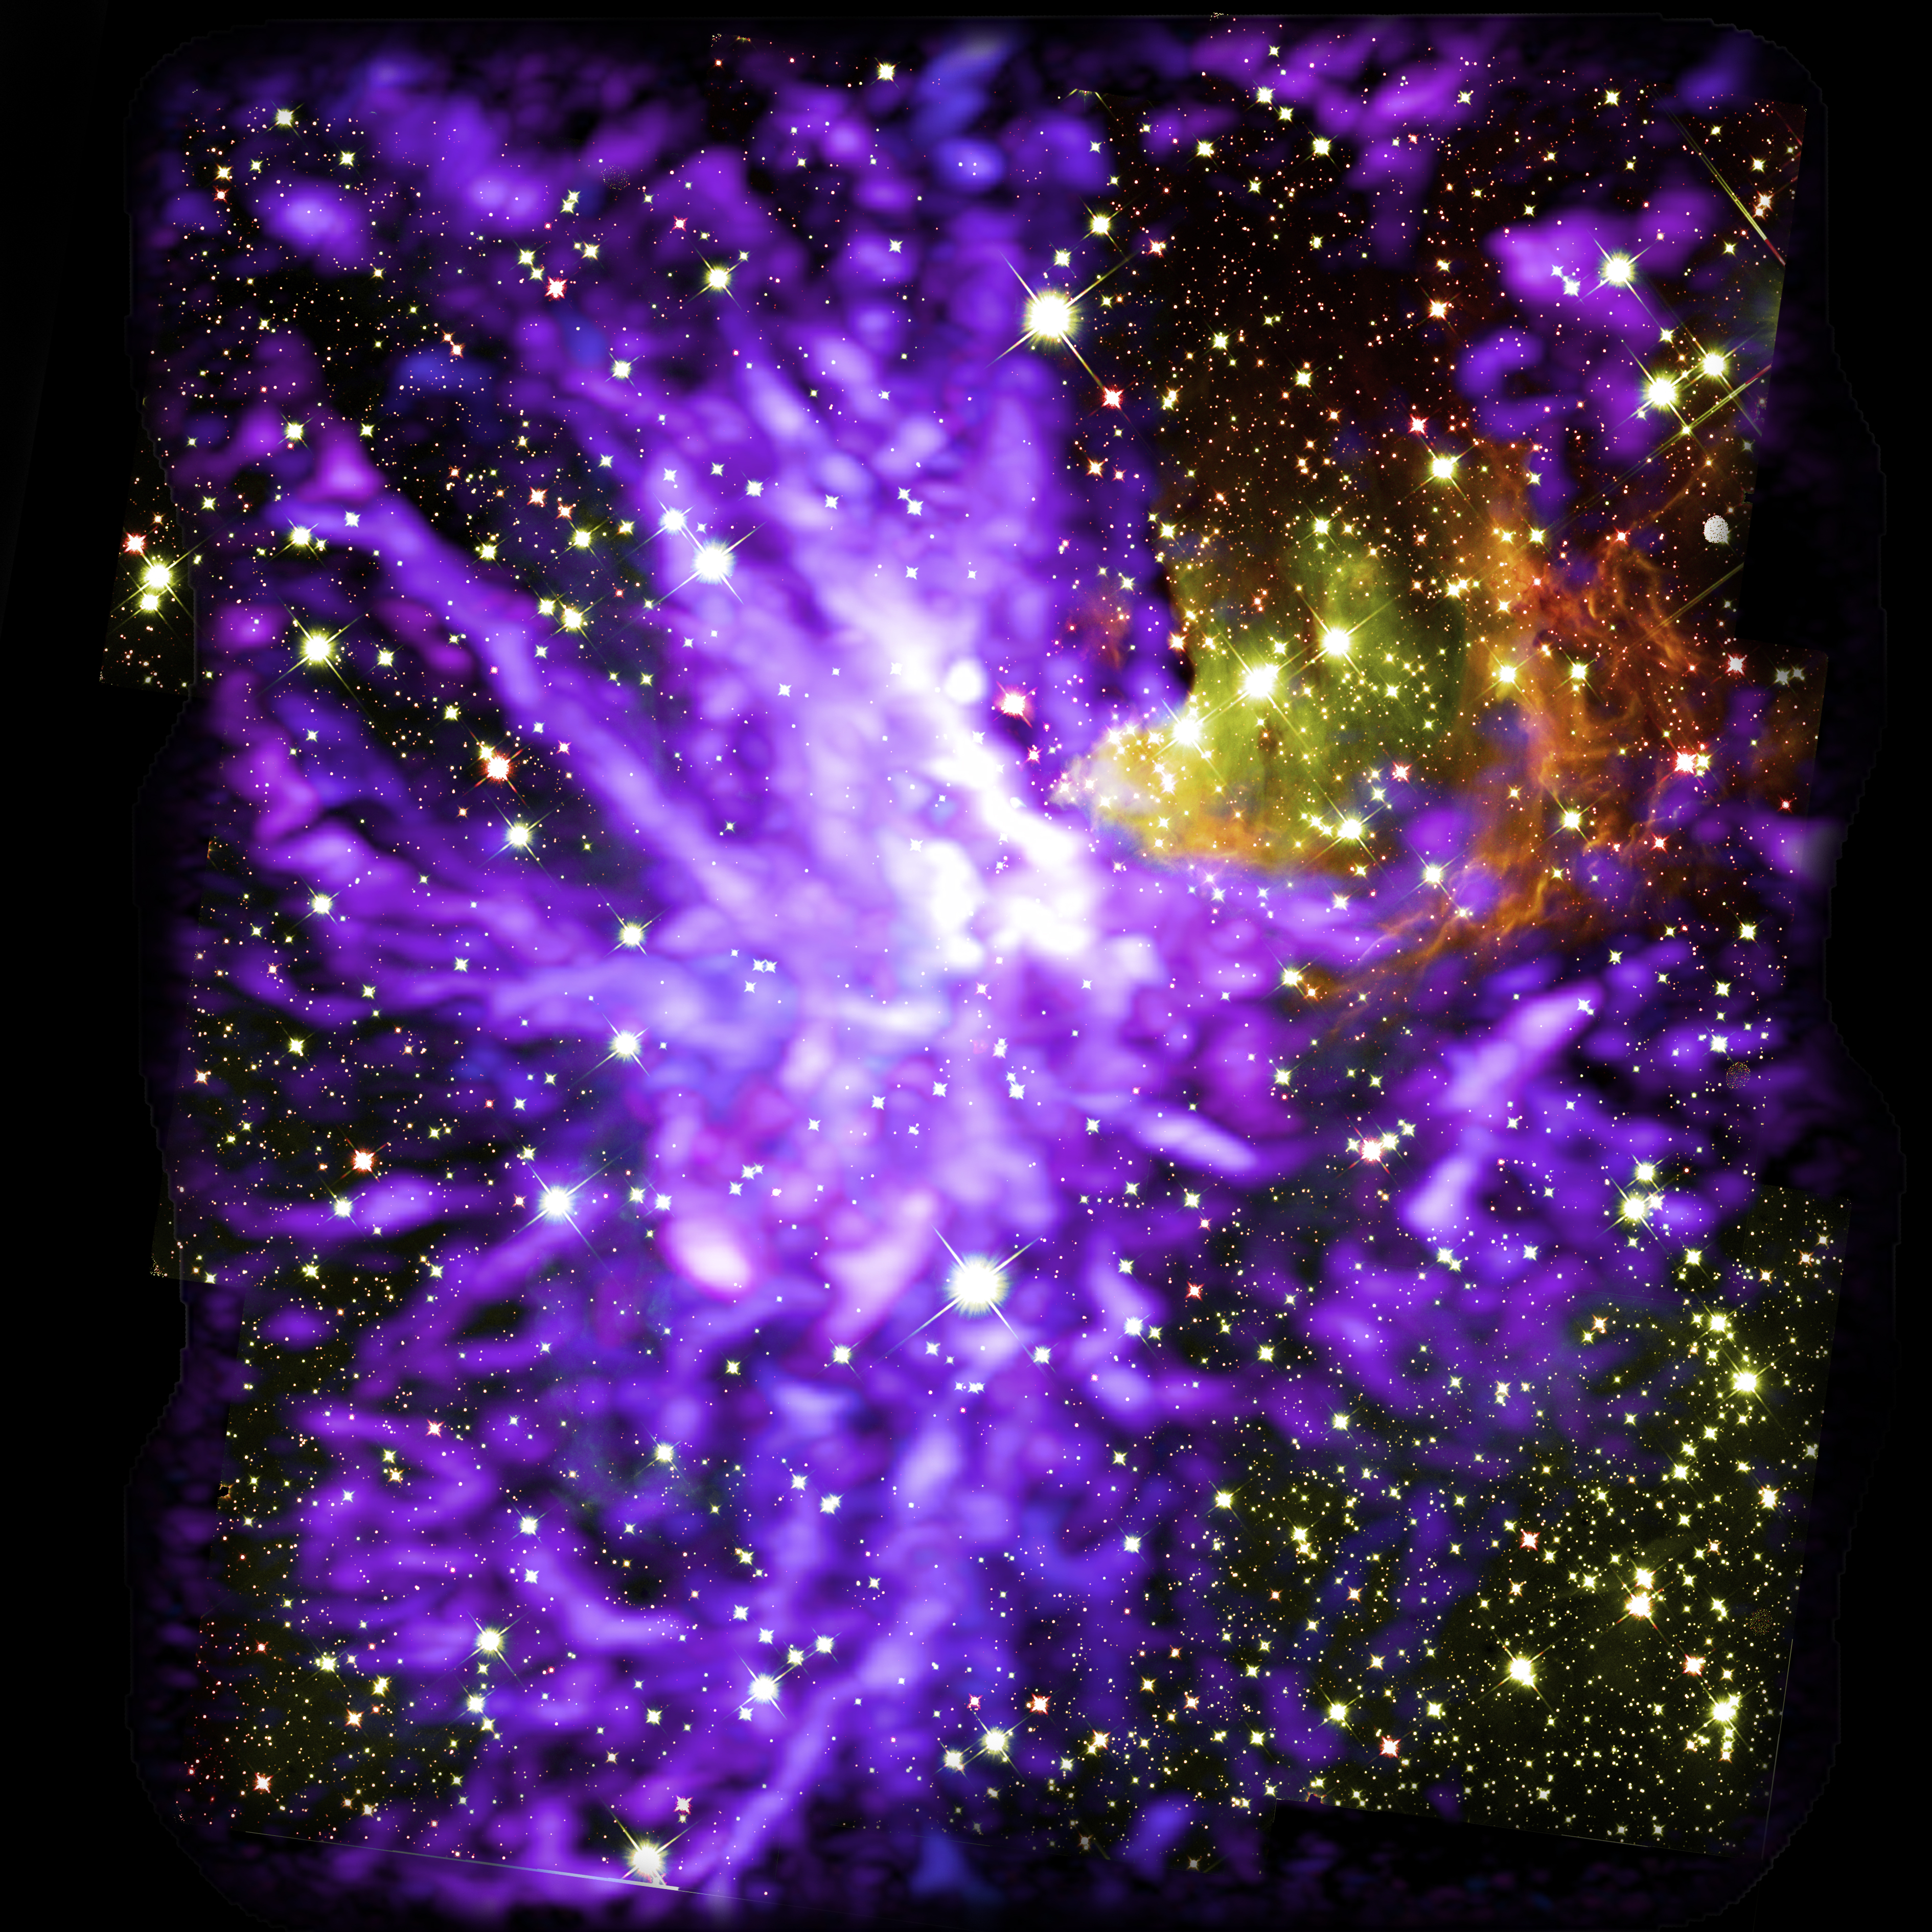 ALMA Mosaic Star Cluster